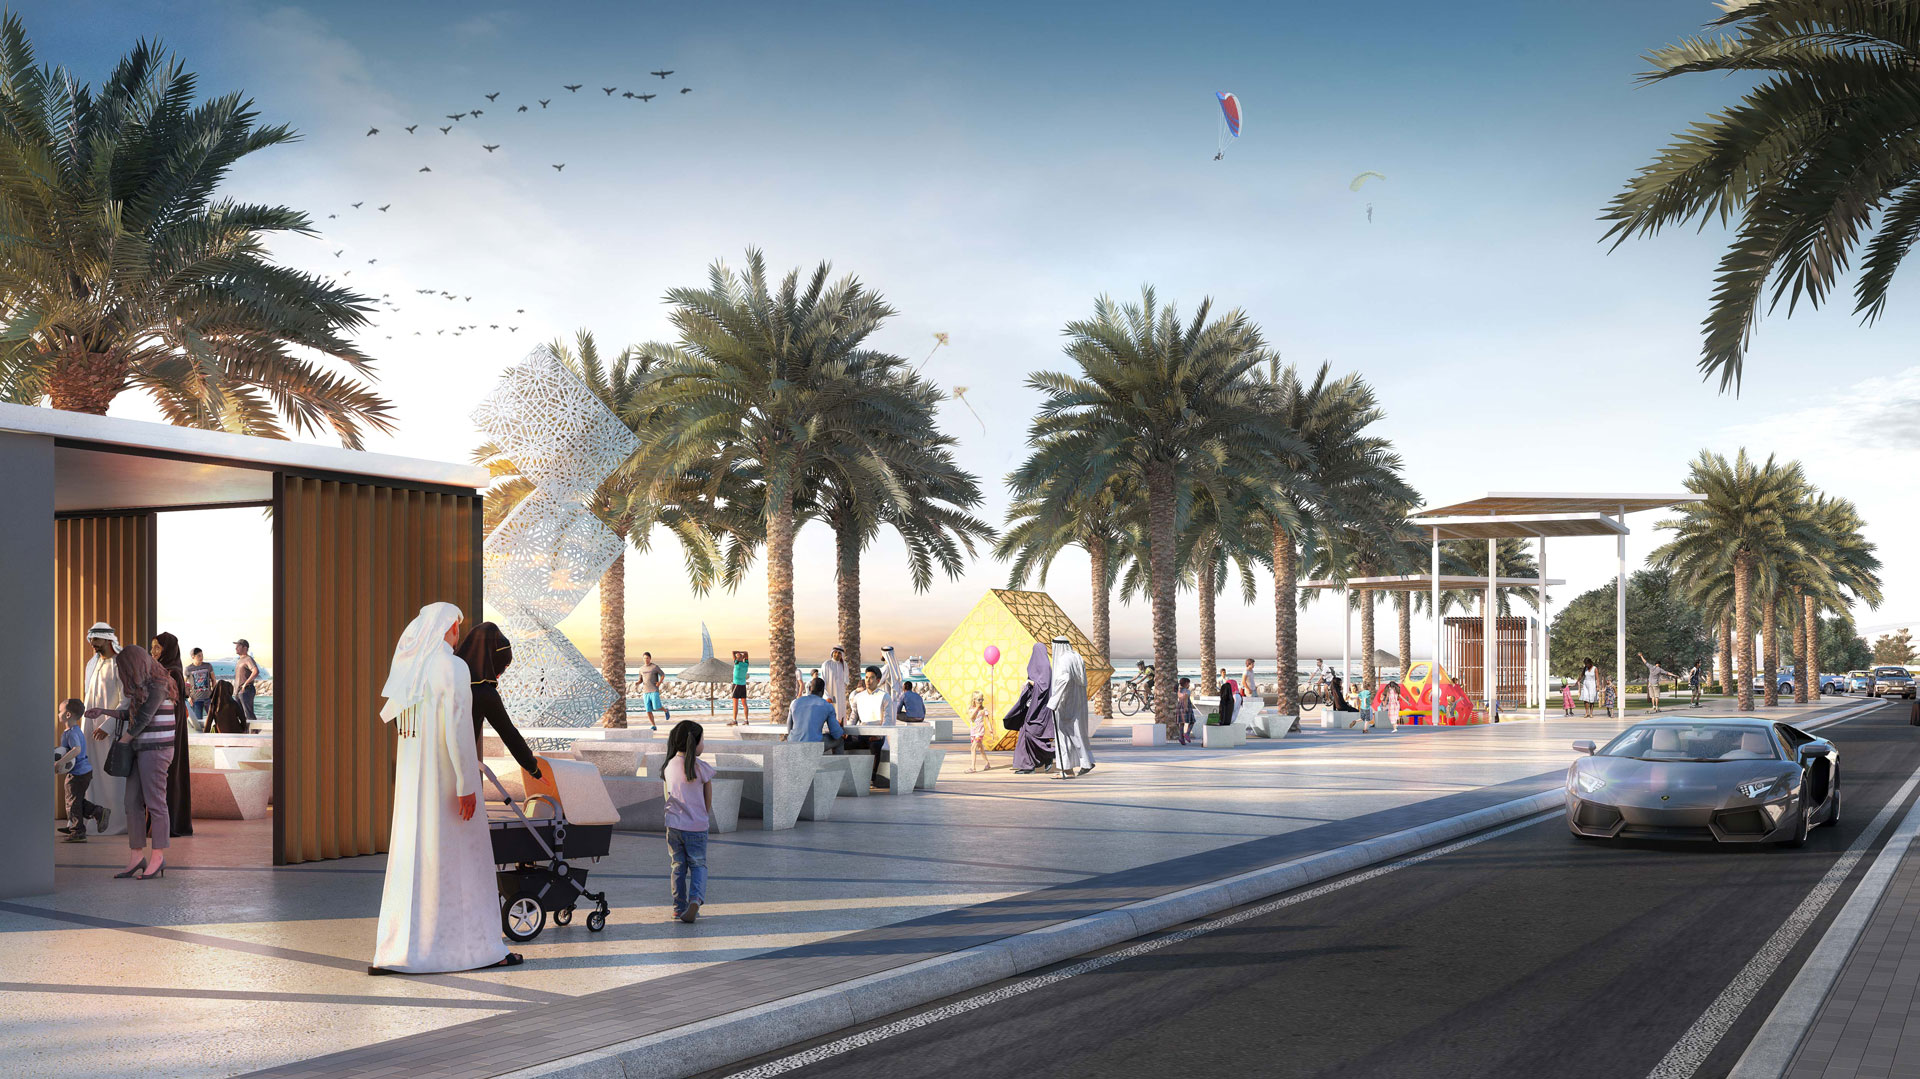 Sharjah Beach Development Project